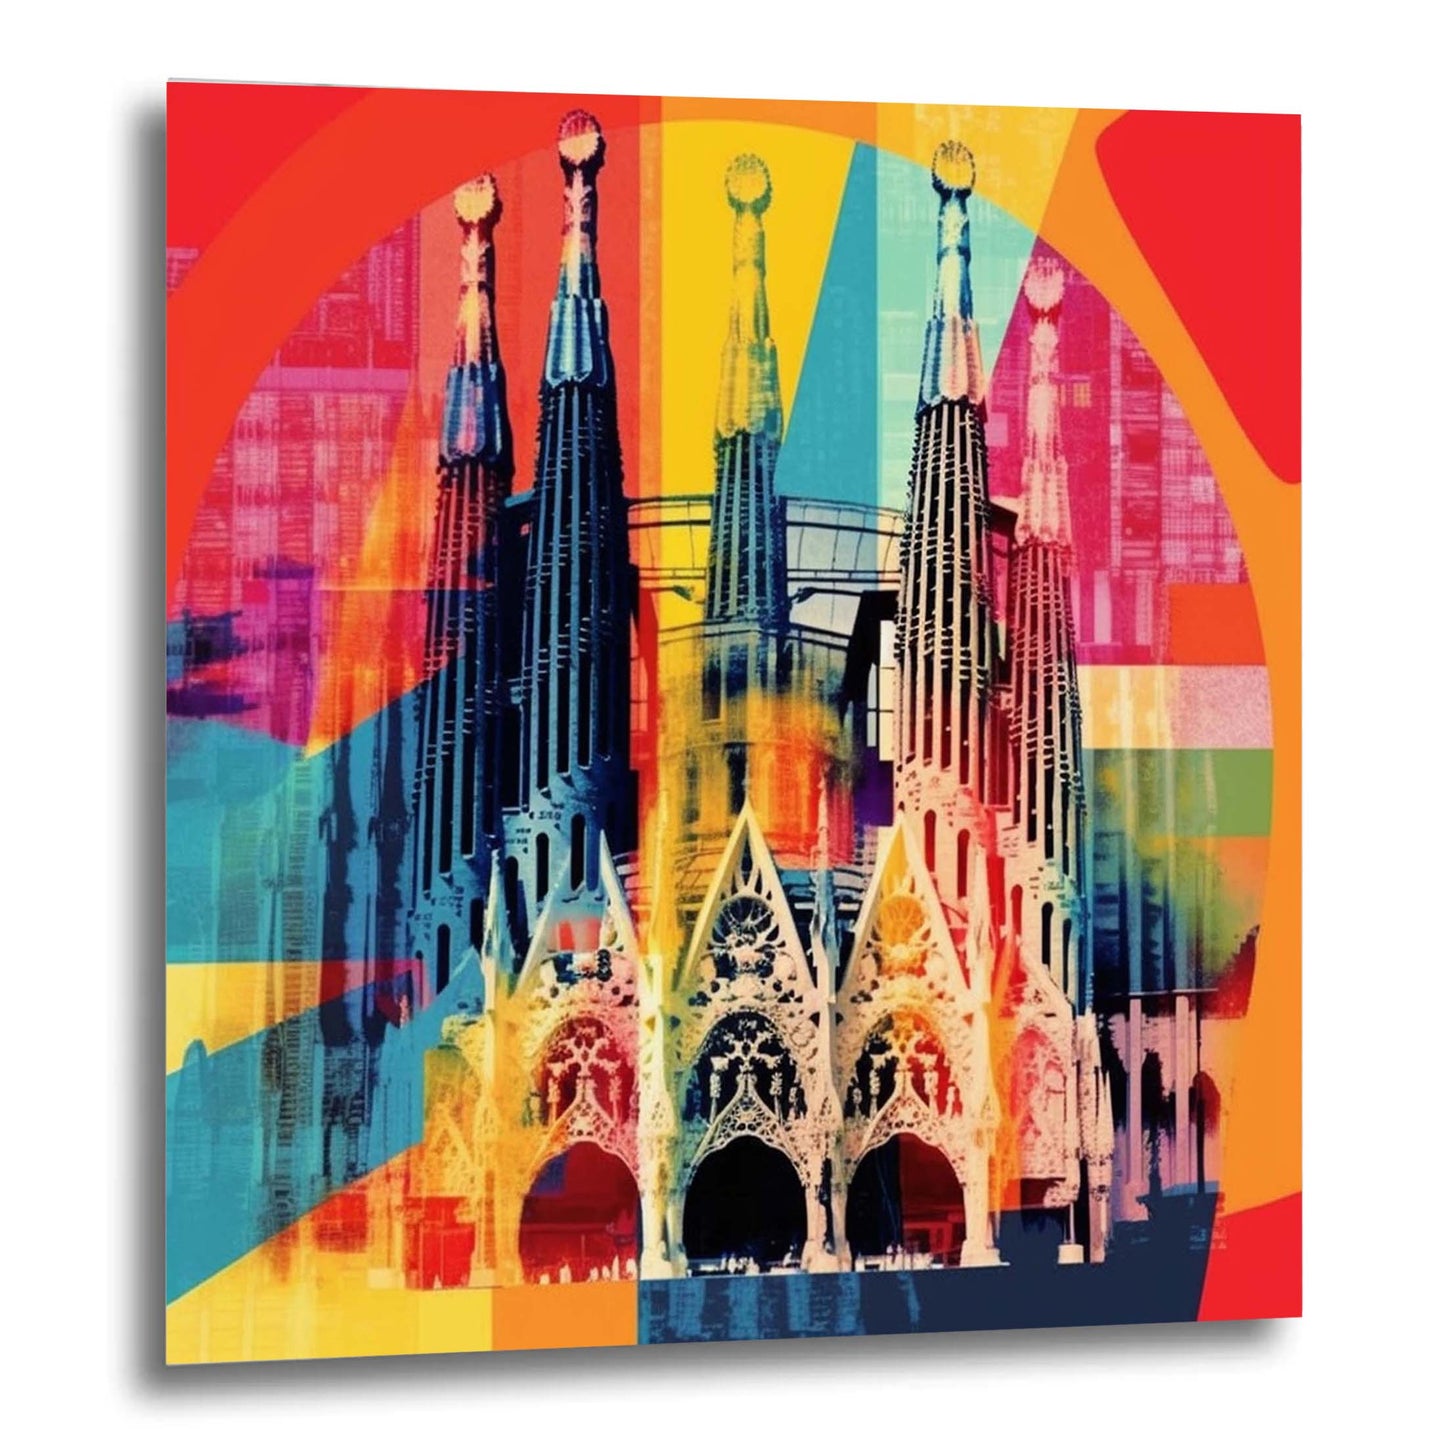 Barcelona Sagrada Familia - Wandbild in der Stilrichtung der Pop-Art